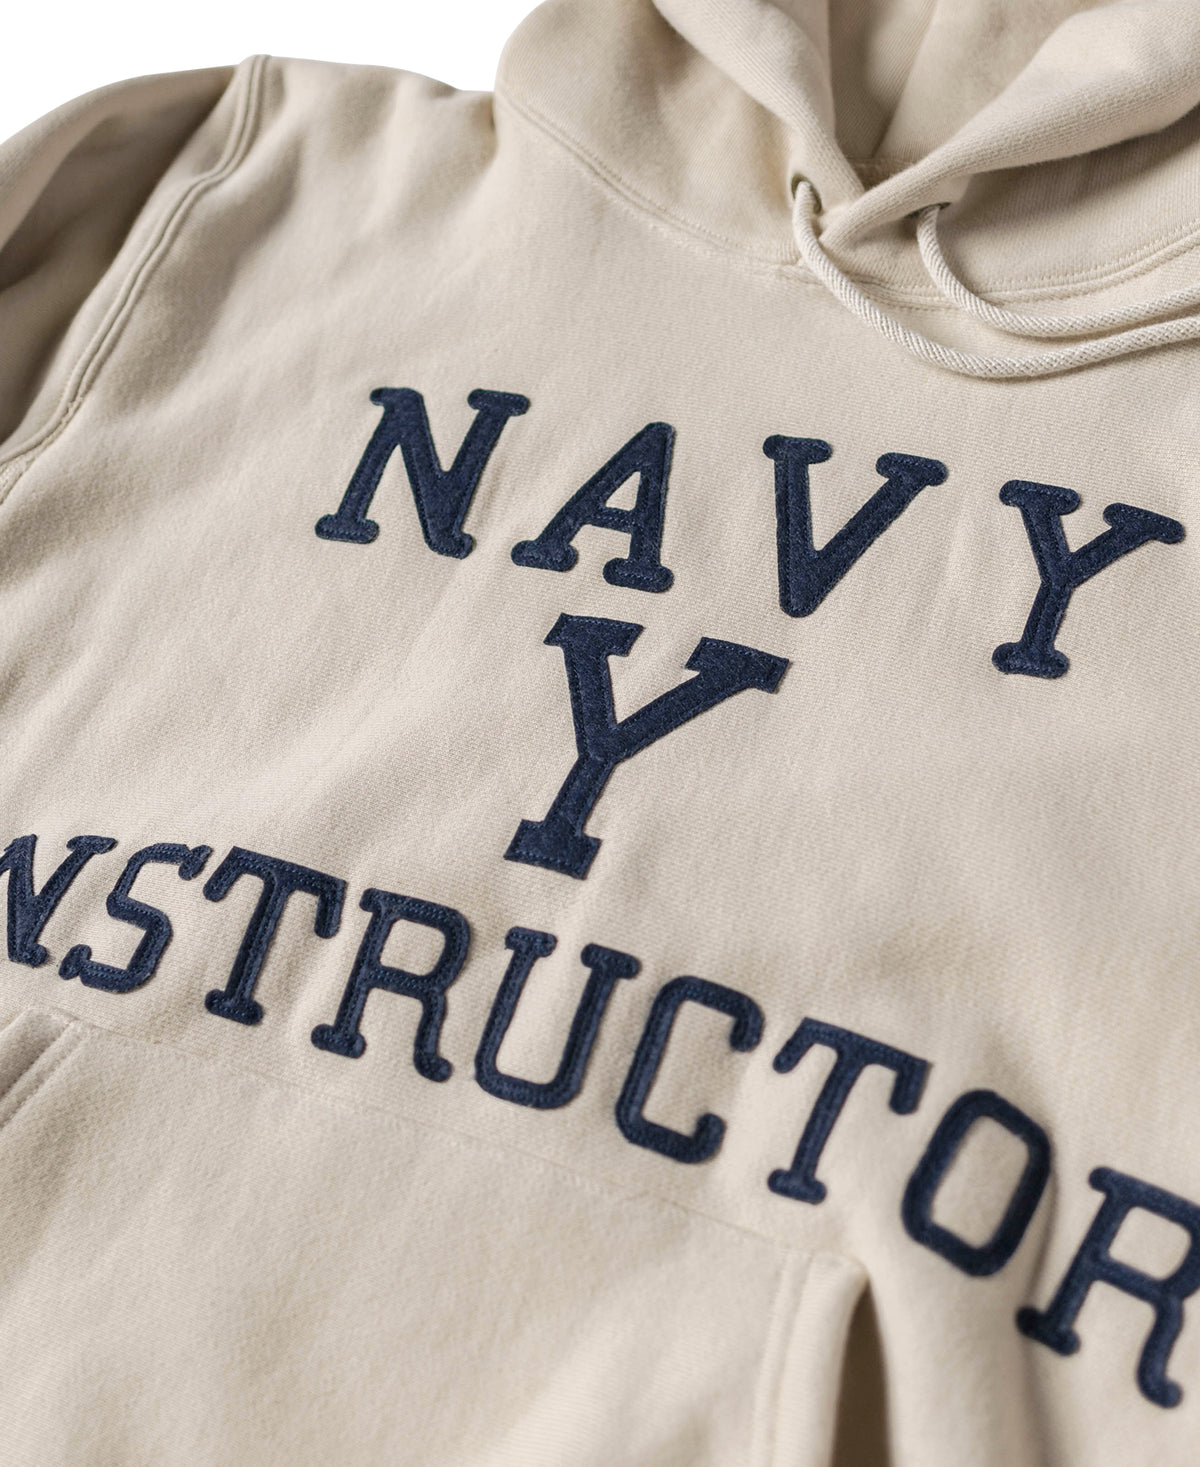 21 oz Navy Yard Instructor Reverse Weave Hoodie - Apricot